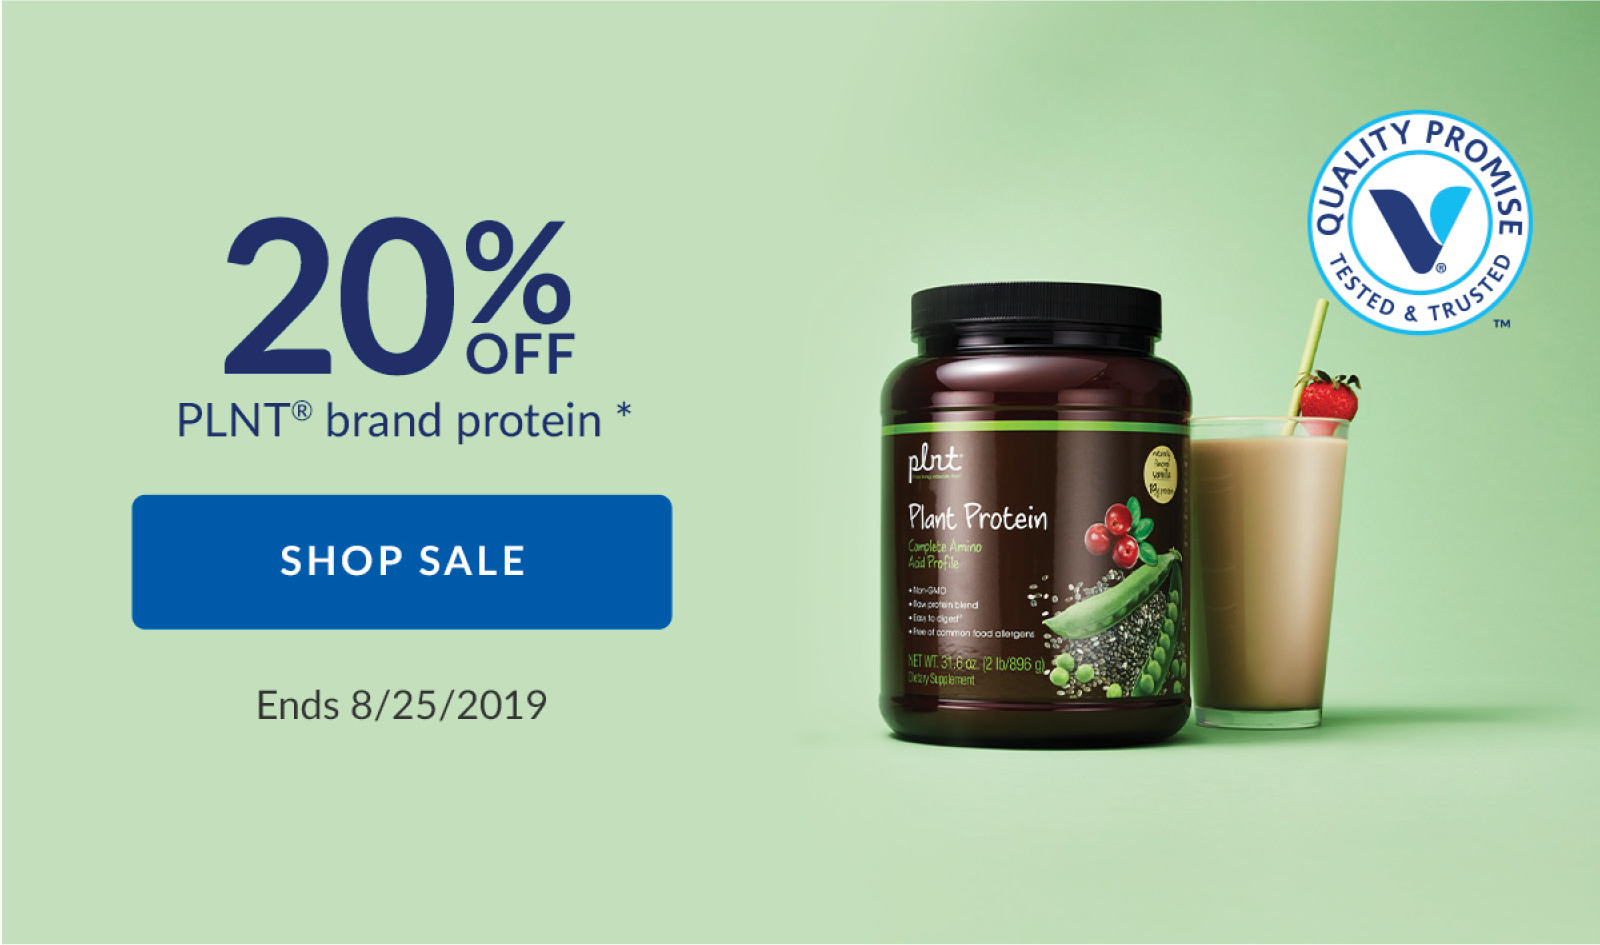 20% OFF PLNT brand protein * | SHOP SALE | Ends 8/25/2019